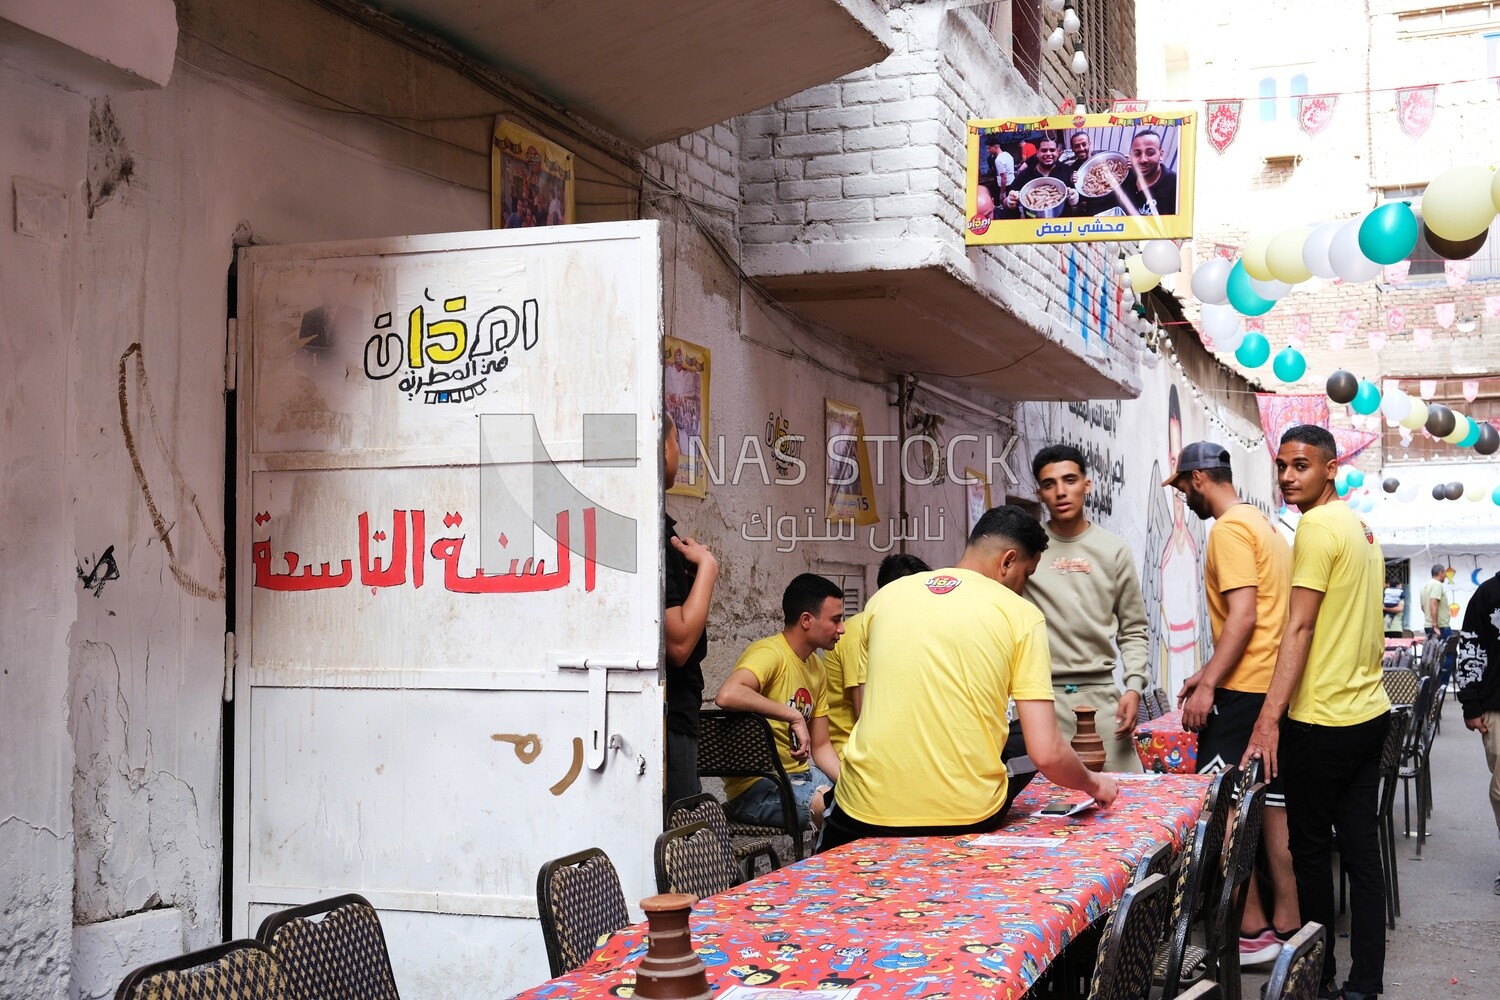 View of people in Matareya sharing their iftar together in the street, Ramadan Kareem, preparing their iftar